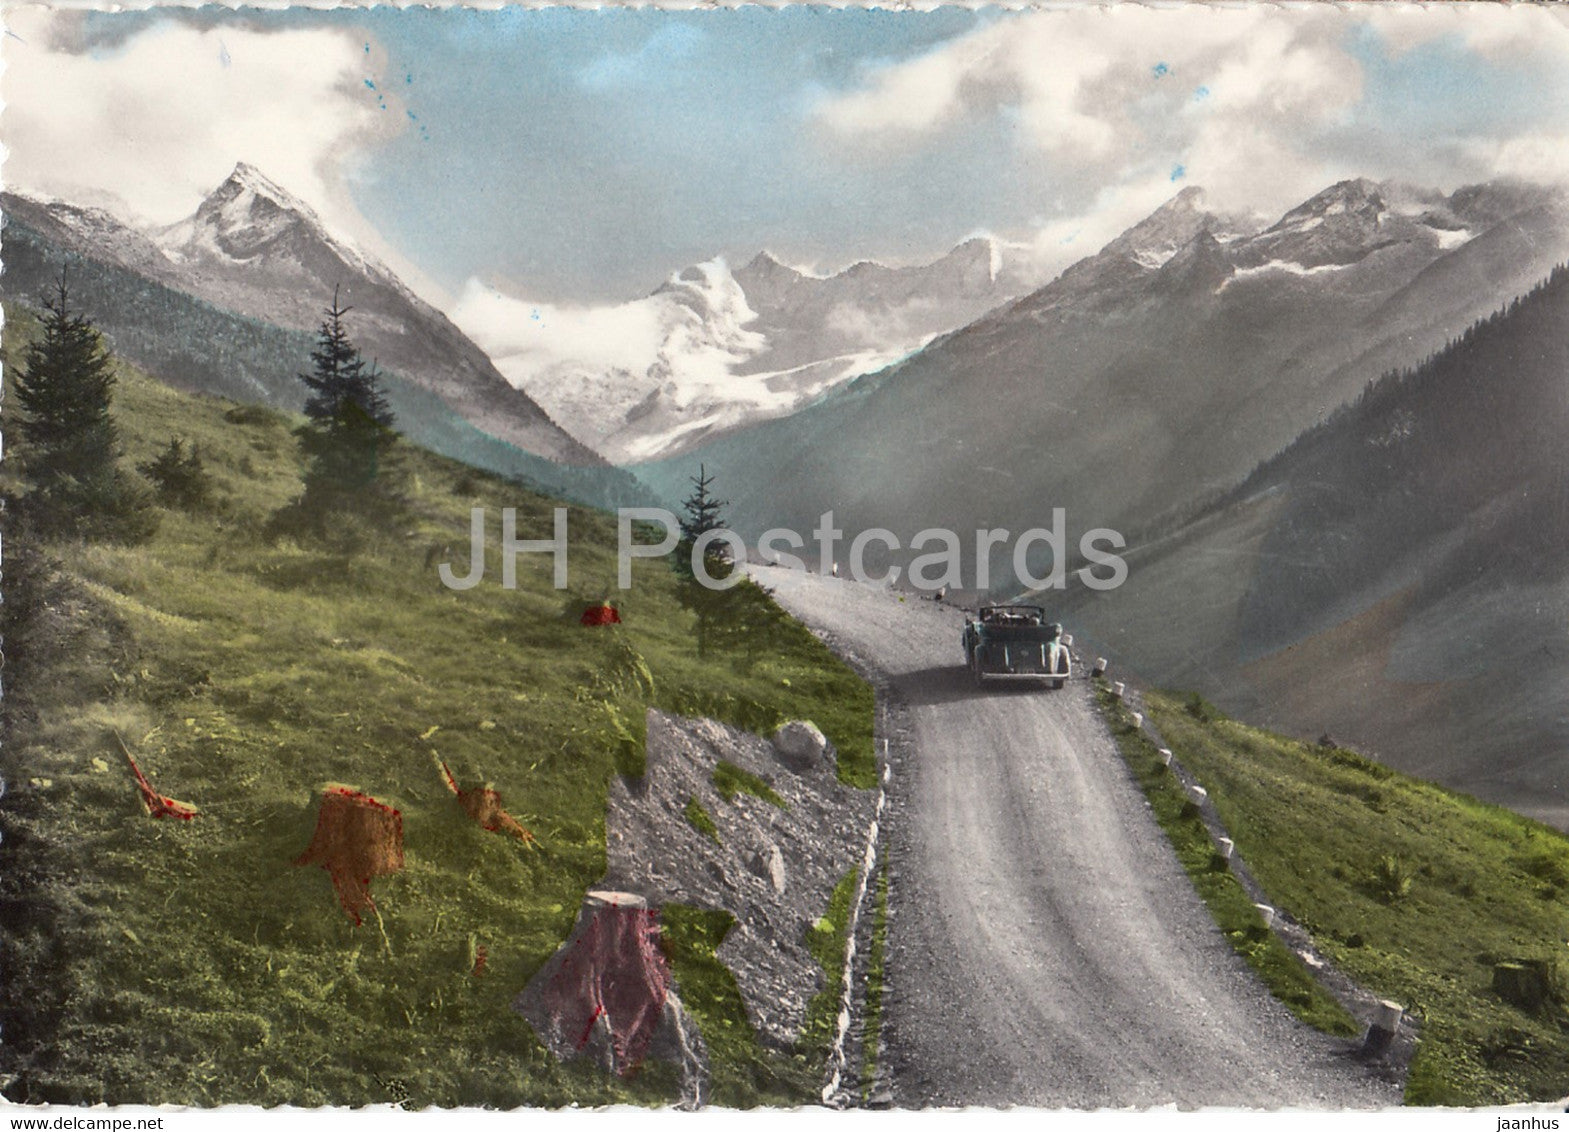 Gerlosstrasse g d Reichenspitzgruppe - old car - Austria - unused - JH Postcards